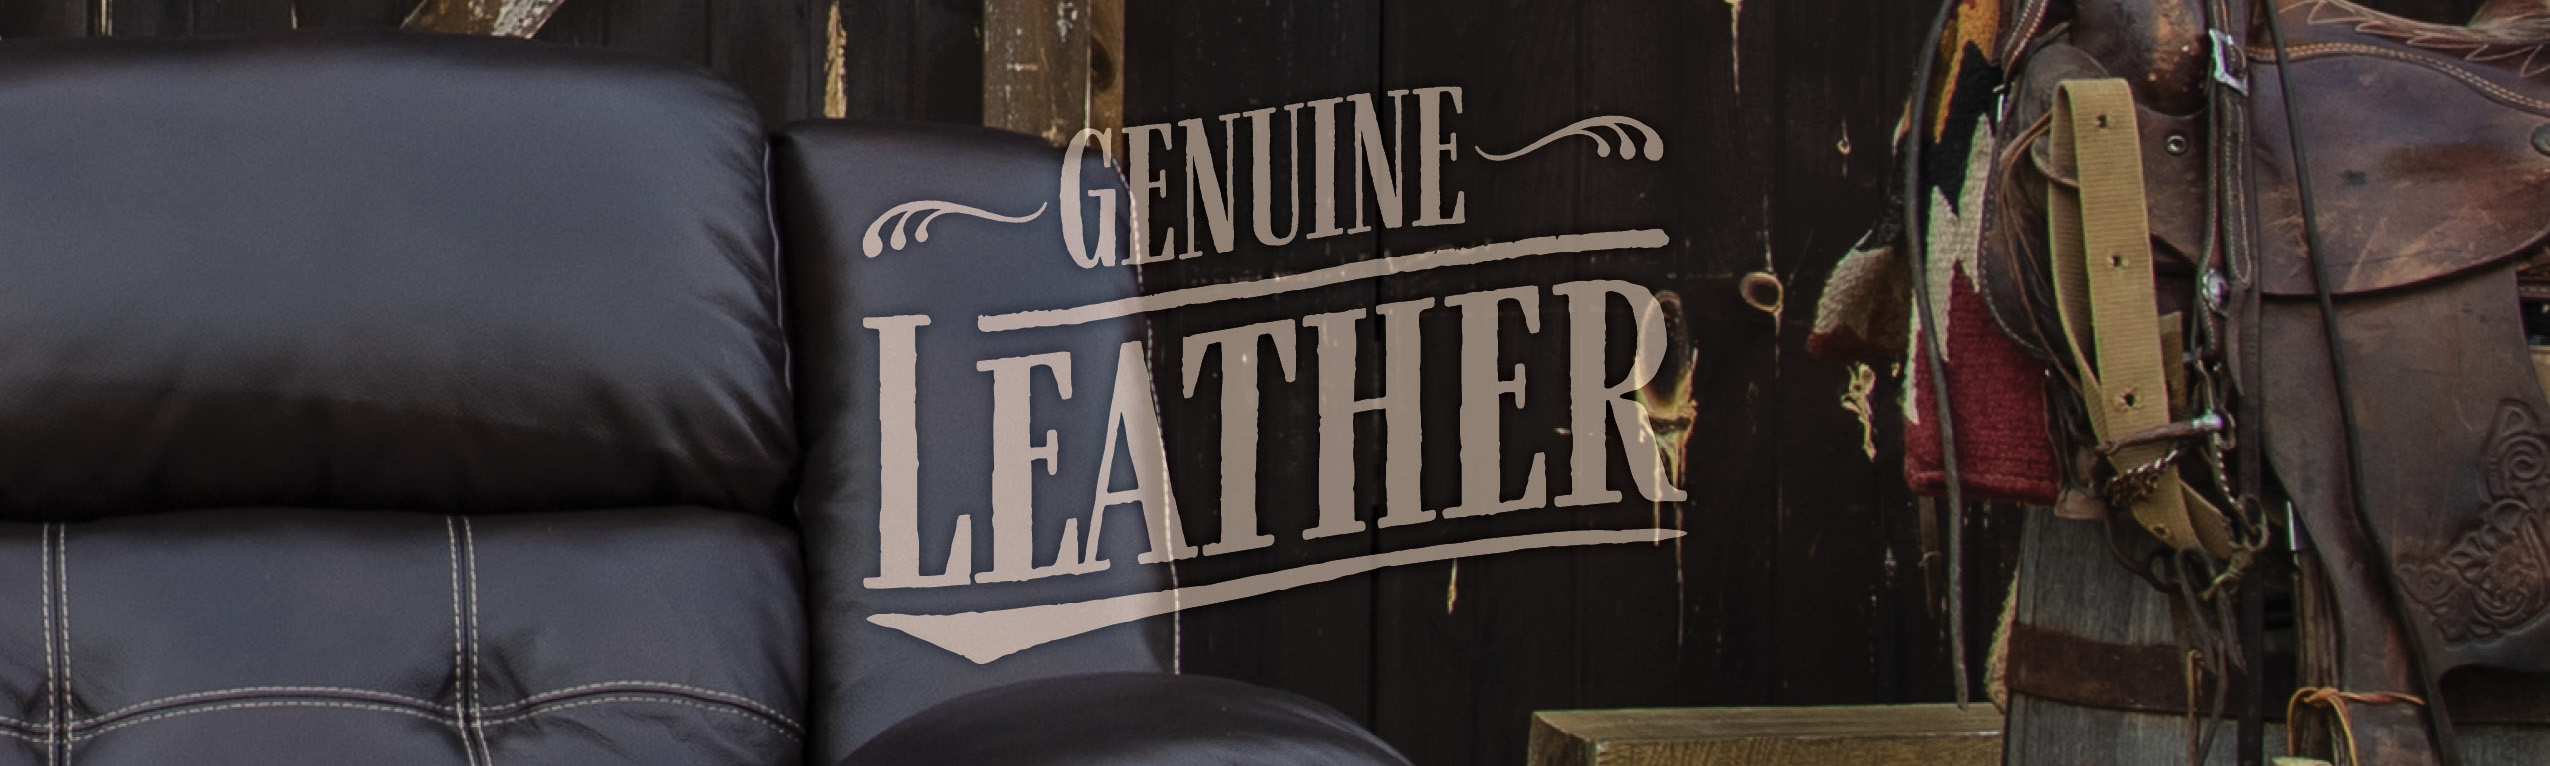 leather header